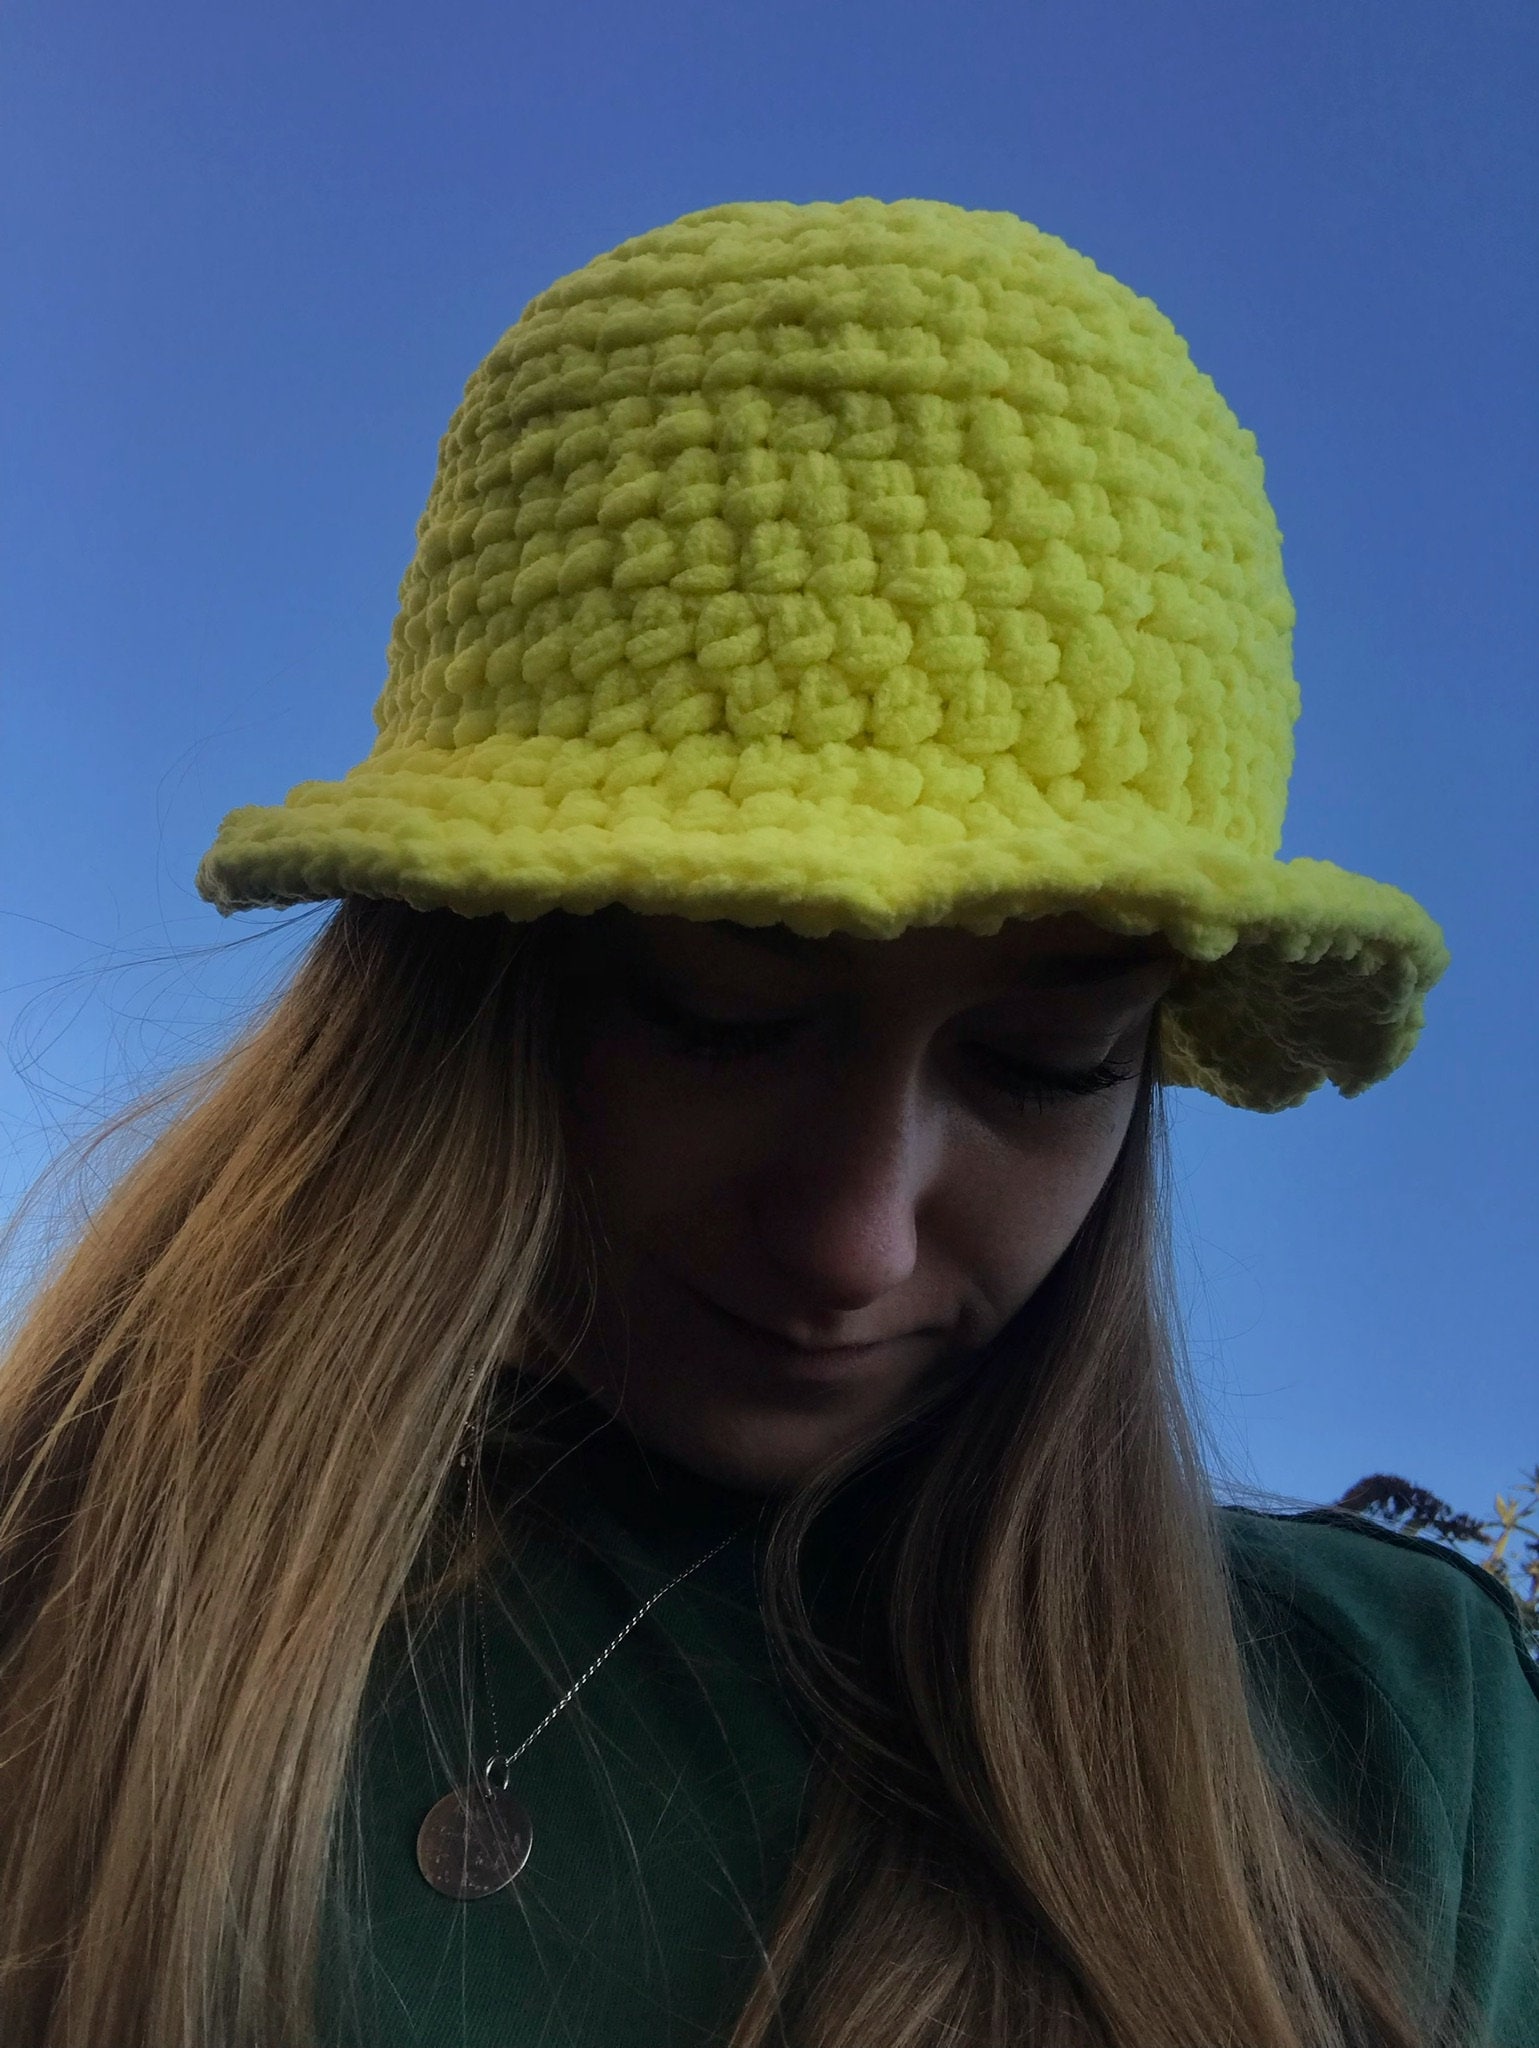 Welcome to Candyland: Kit Kat Inspired Crochet Handmade Bucket Hat